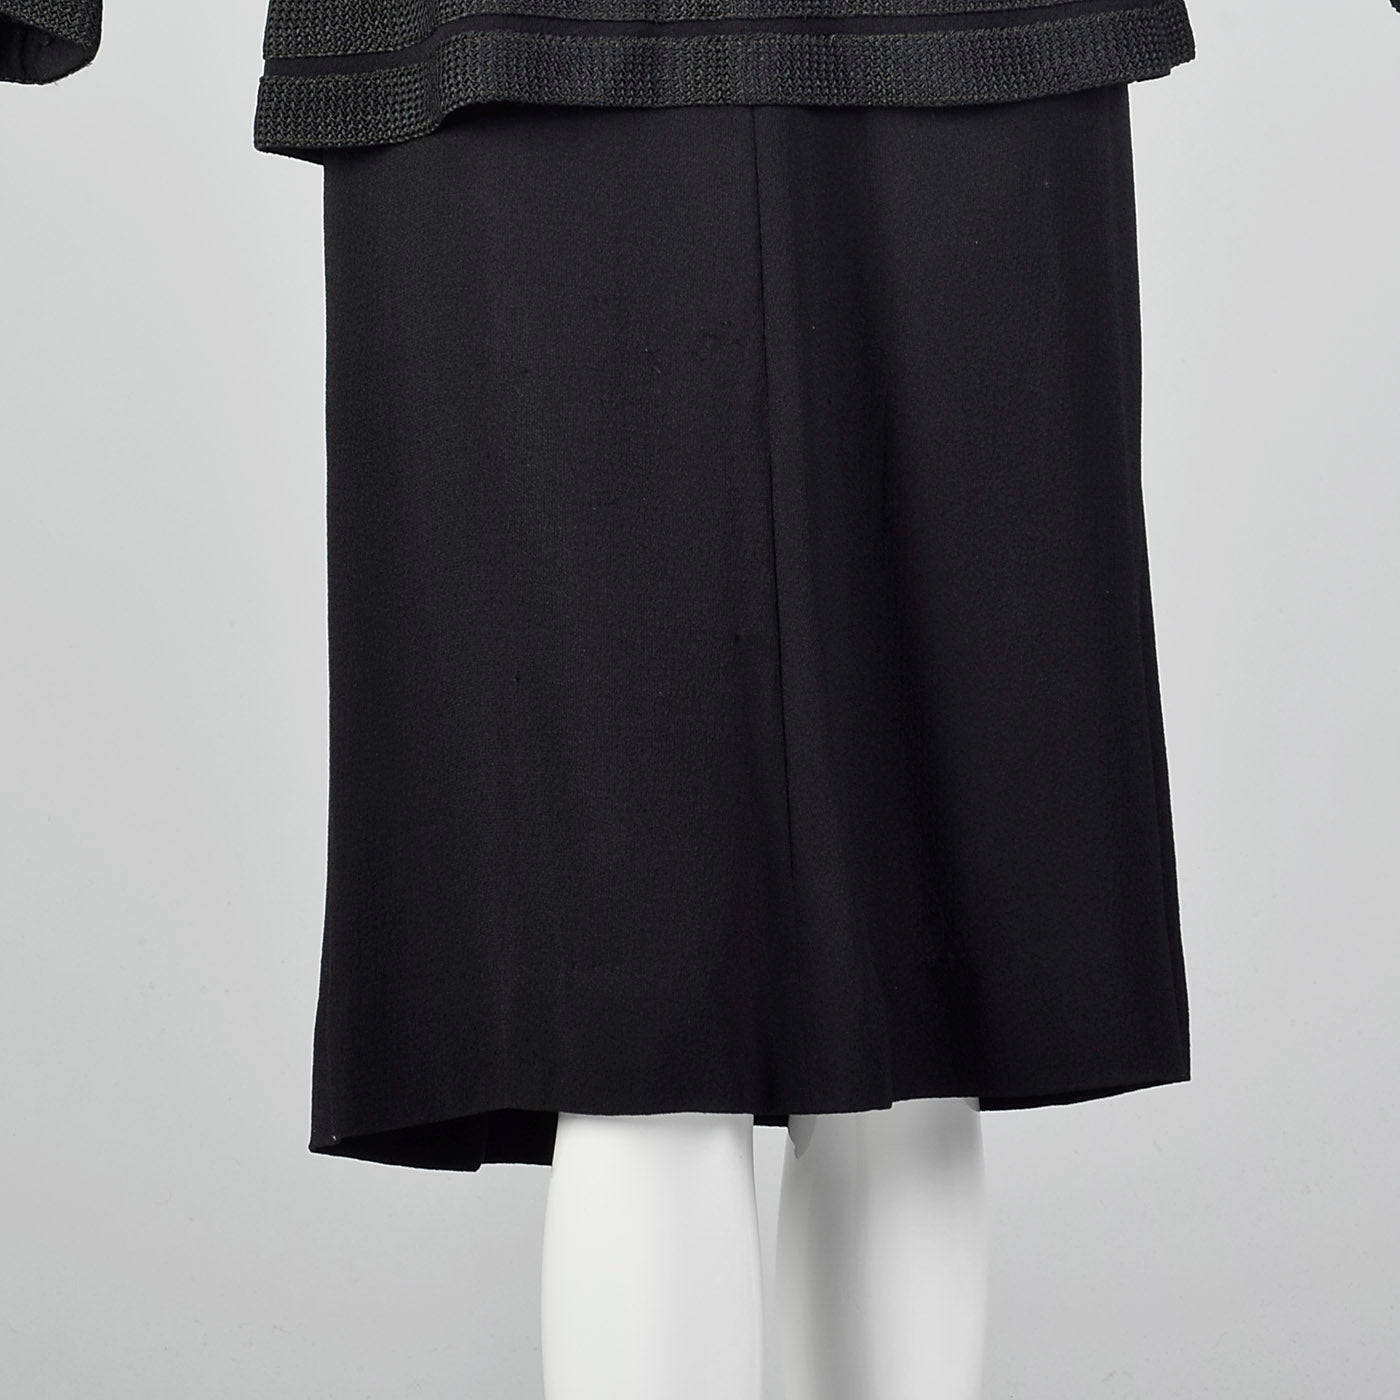 1940s Black Peplum Dress with Woven Stripe Trim